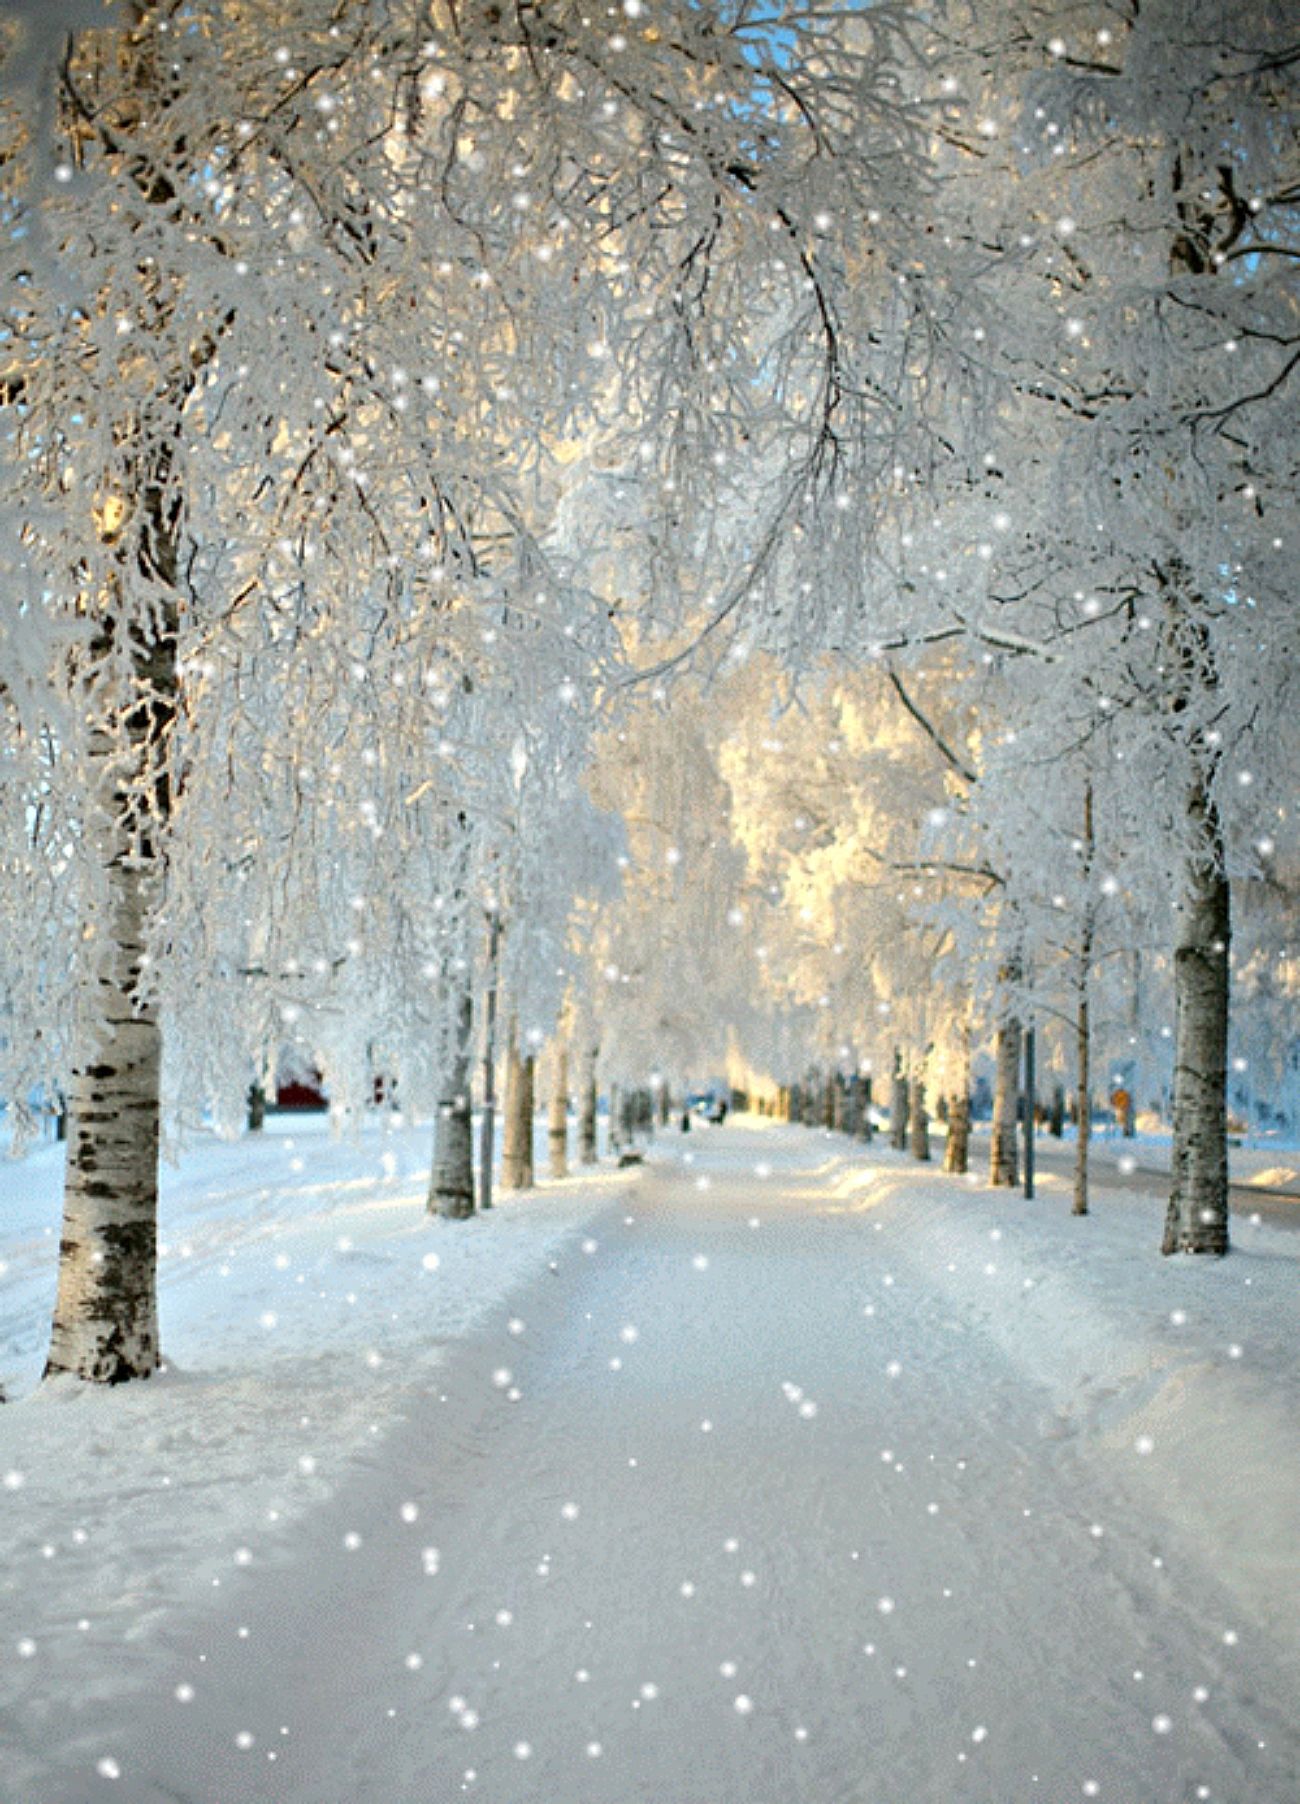 Snow aesthetic Wallpaper Download